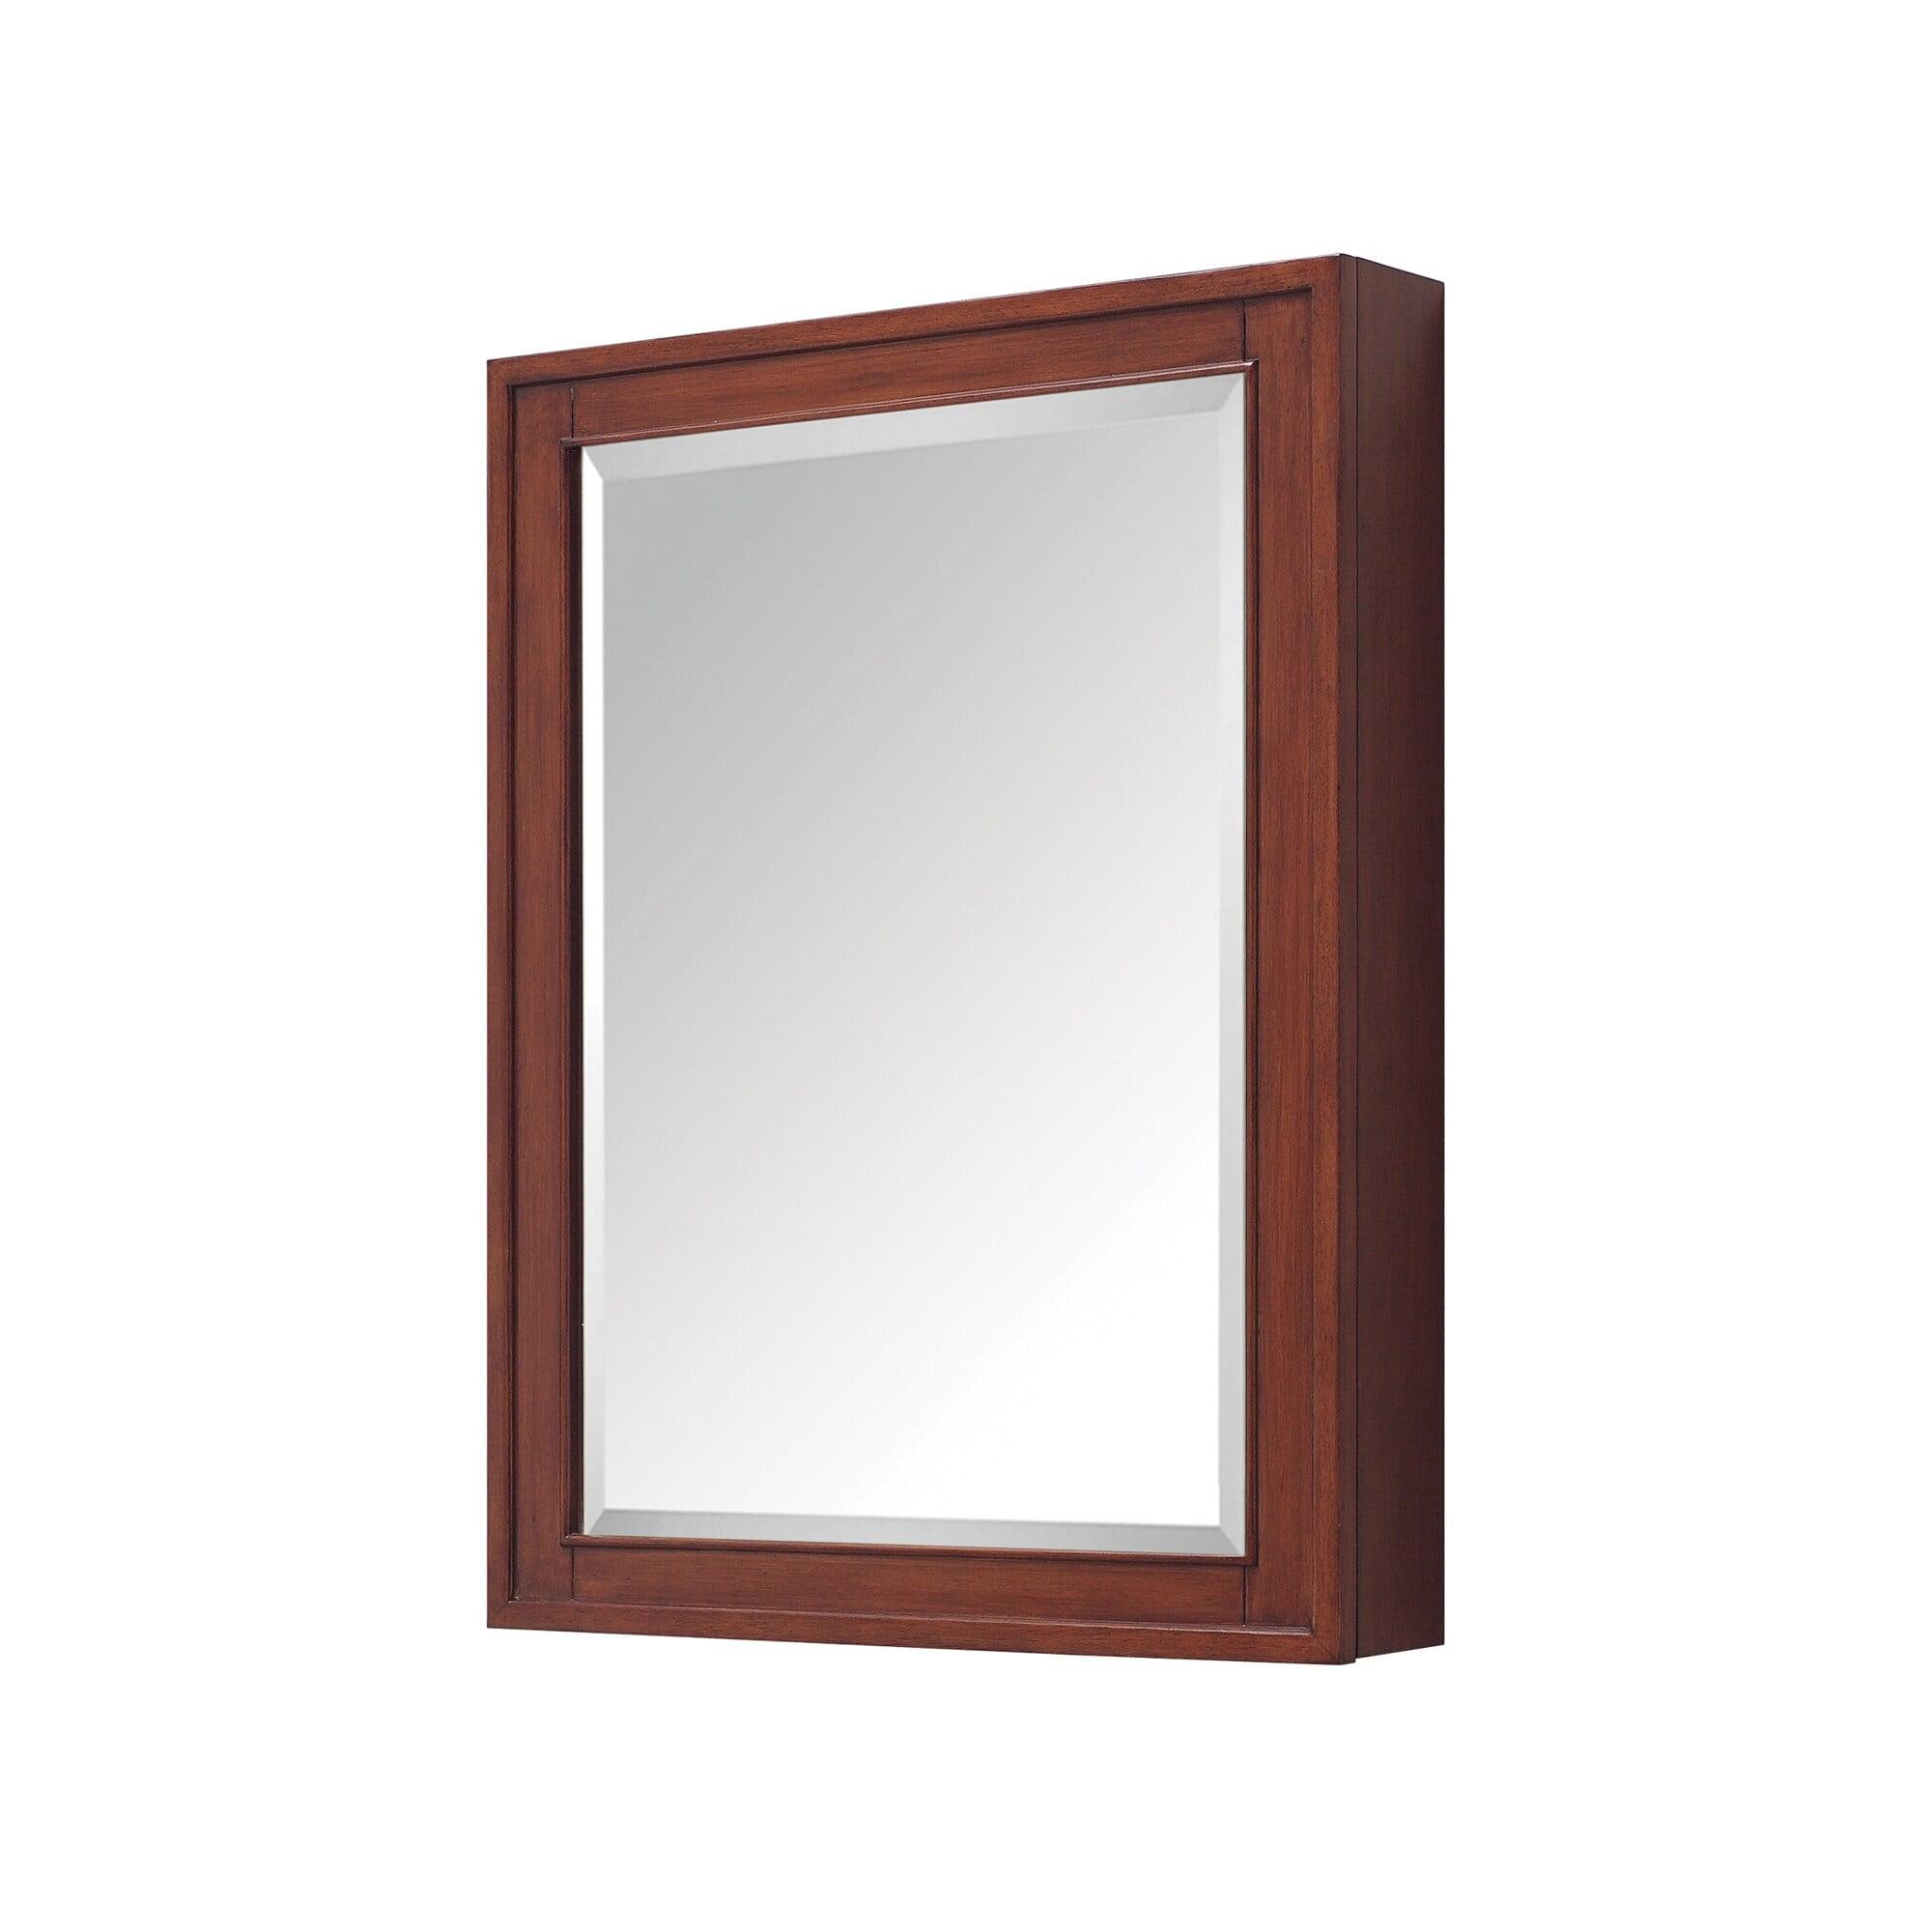 Tobacco Brown 24" x 32" Wooden Framed Mirror Cabinet